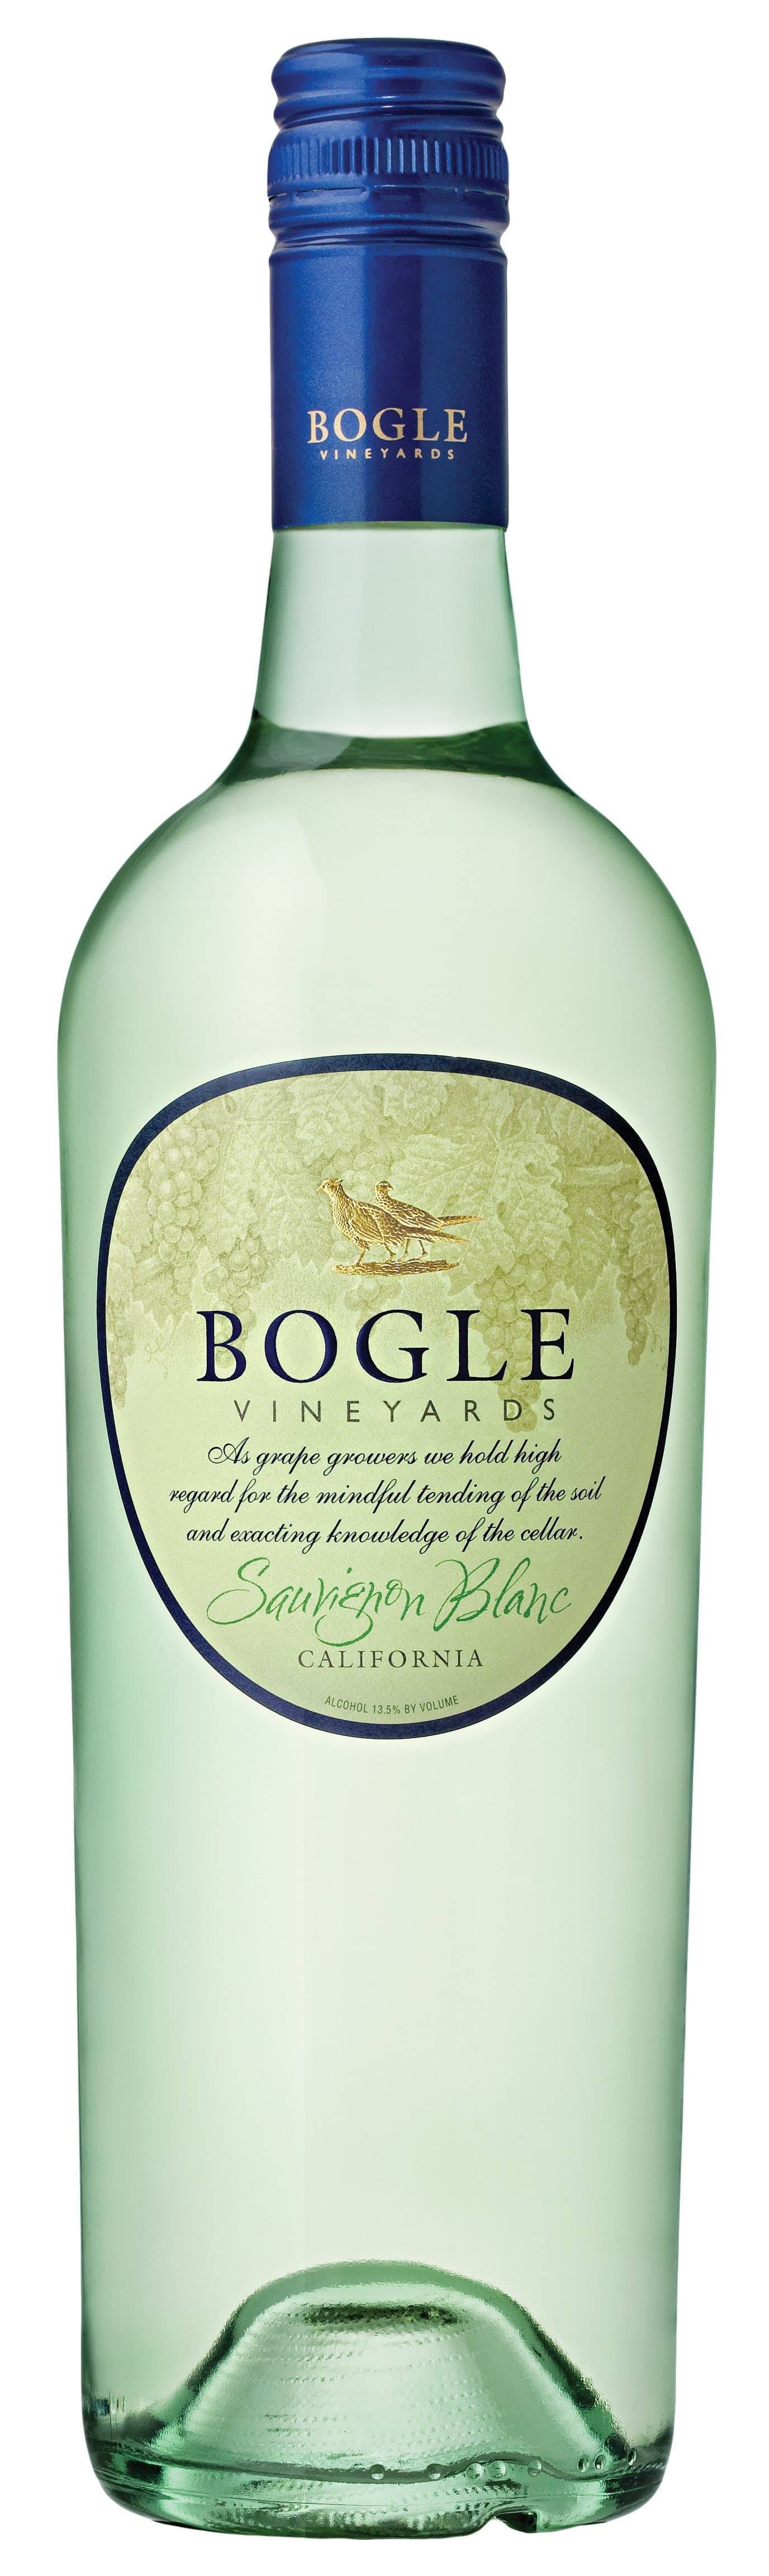 Bogle Vineyards Sauvignon Blanc, California - 750 milliliters